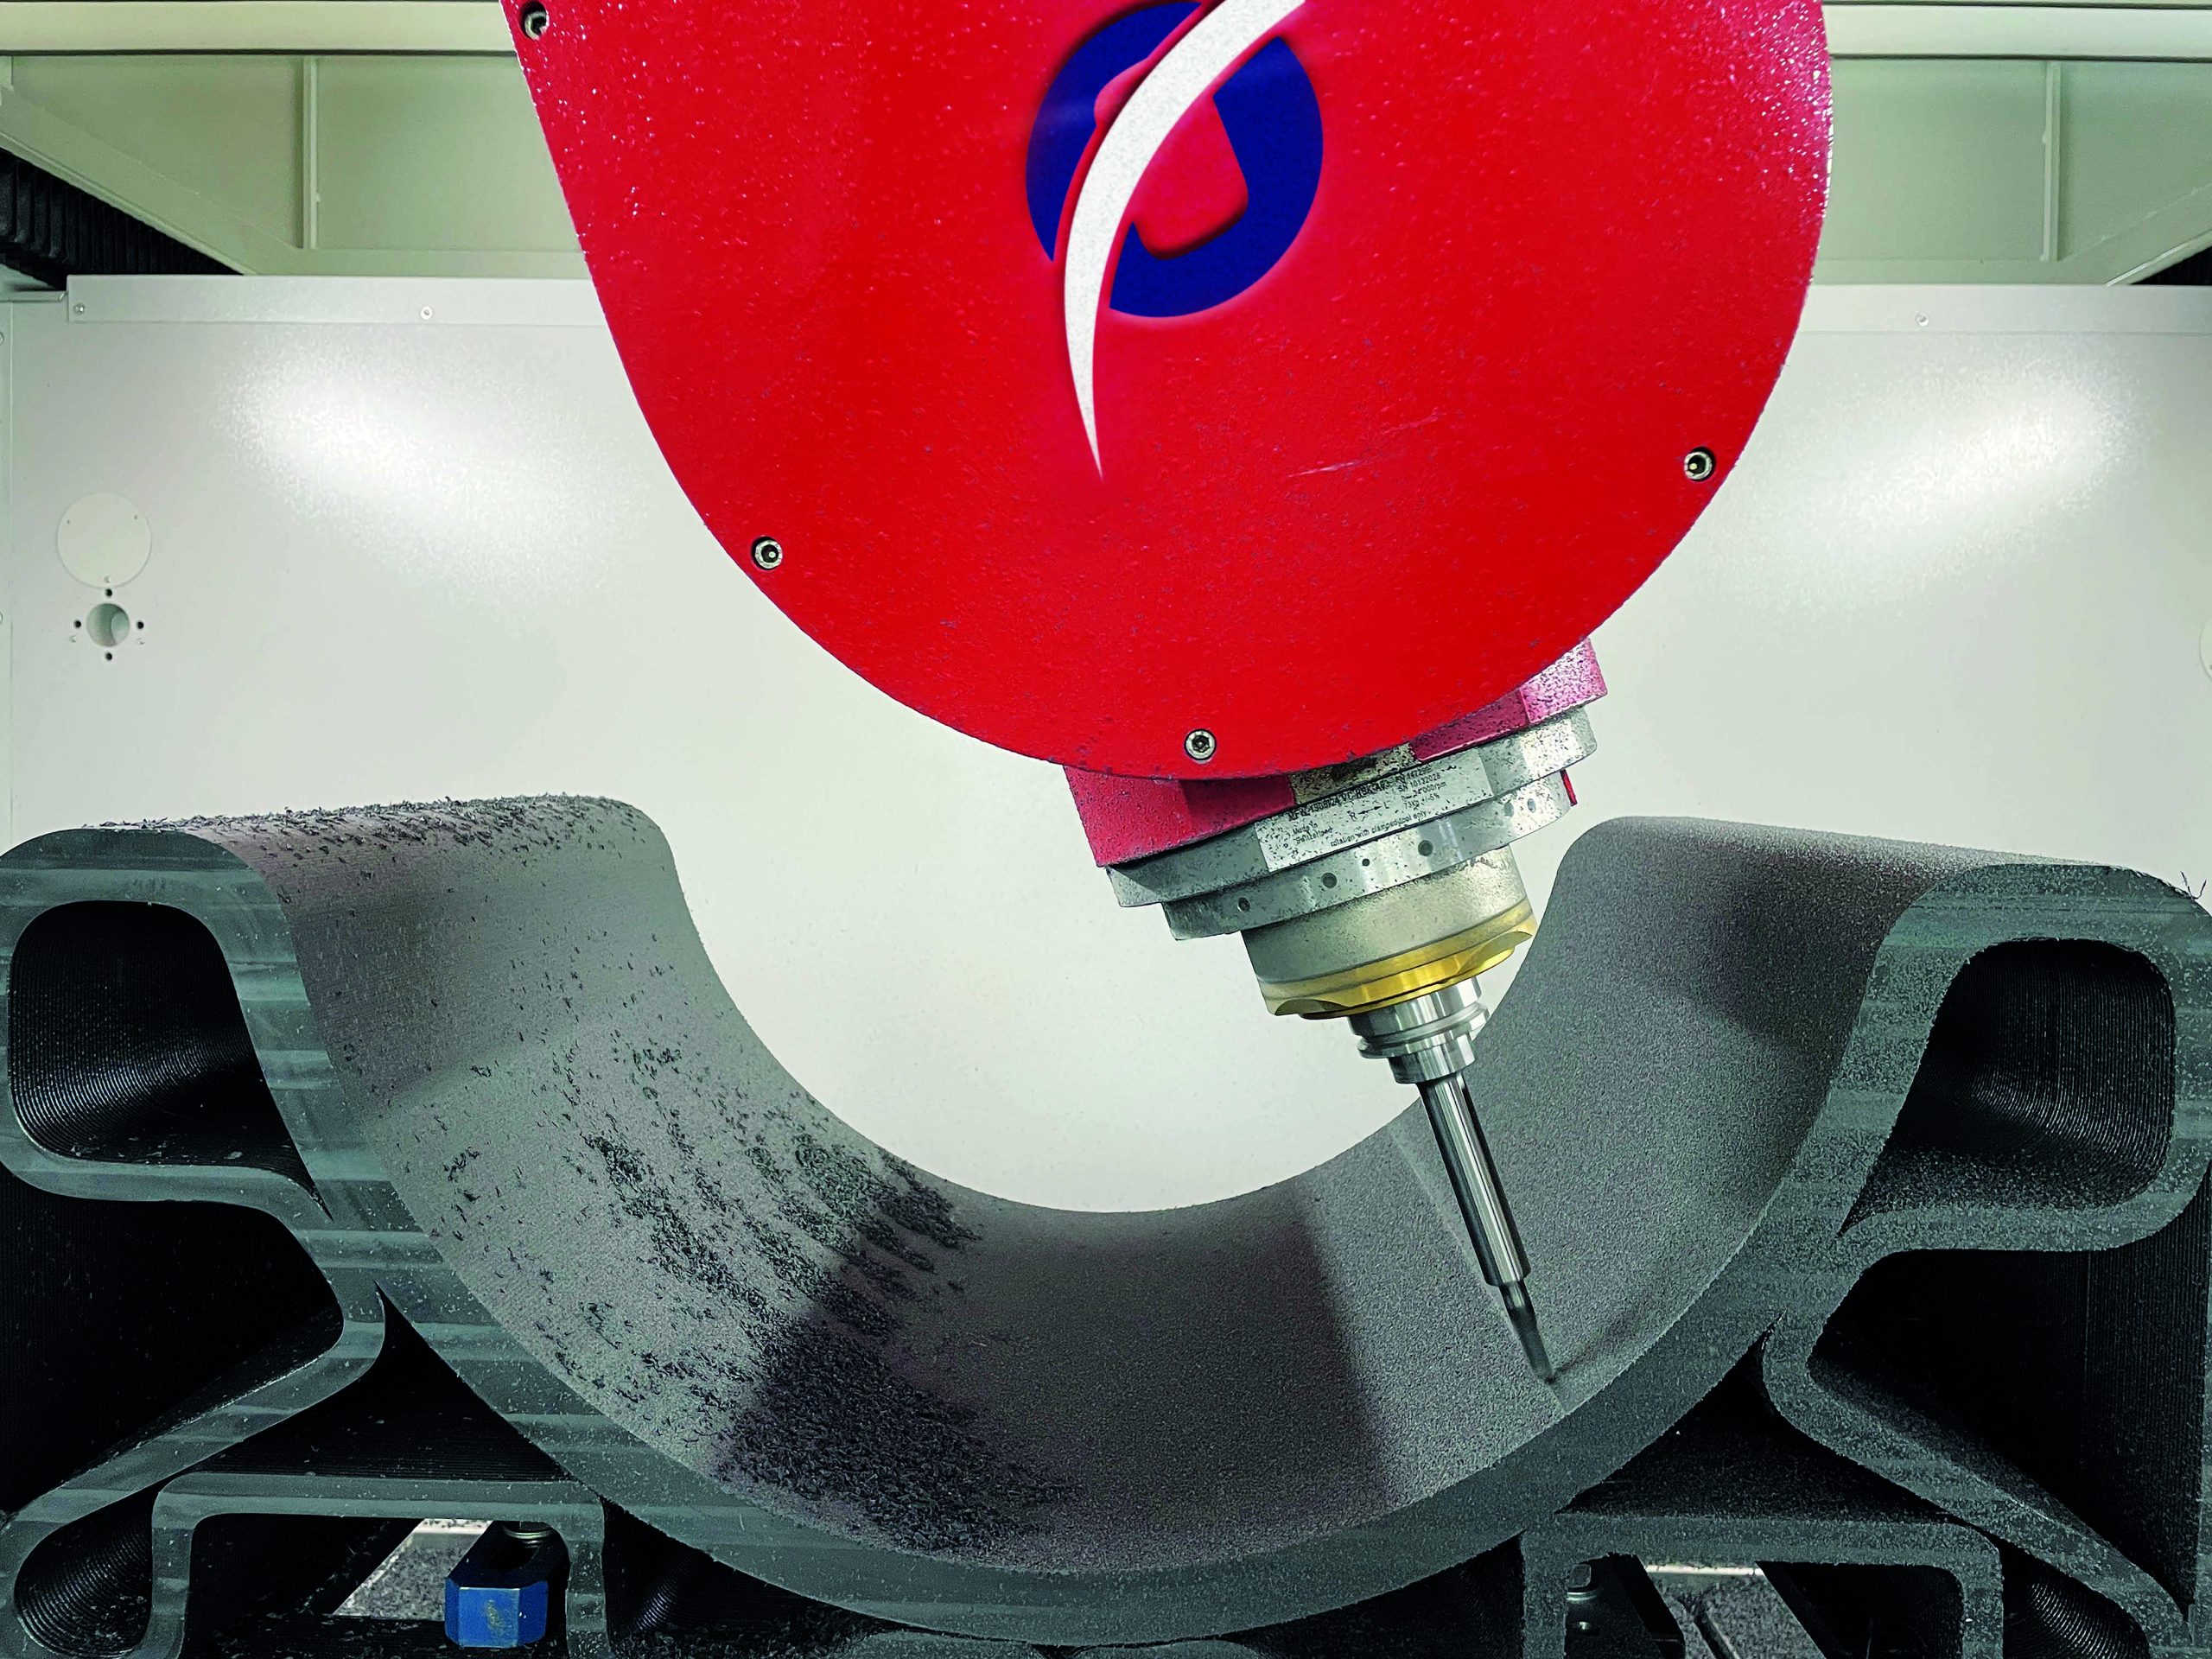  Cnc milling on carbon fiber mould for aerospace application